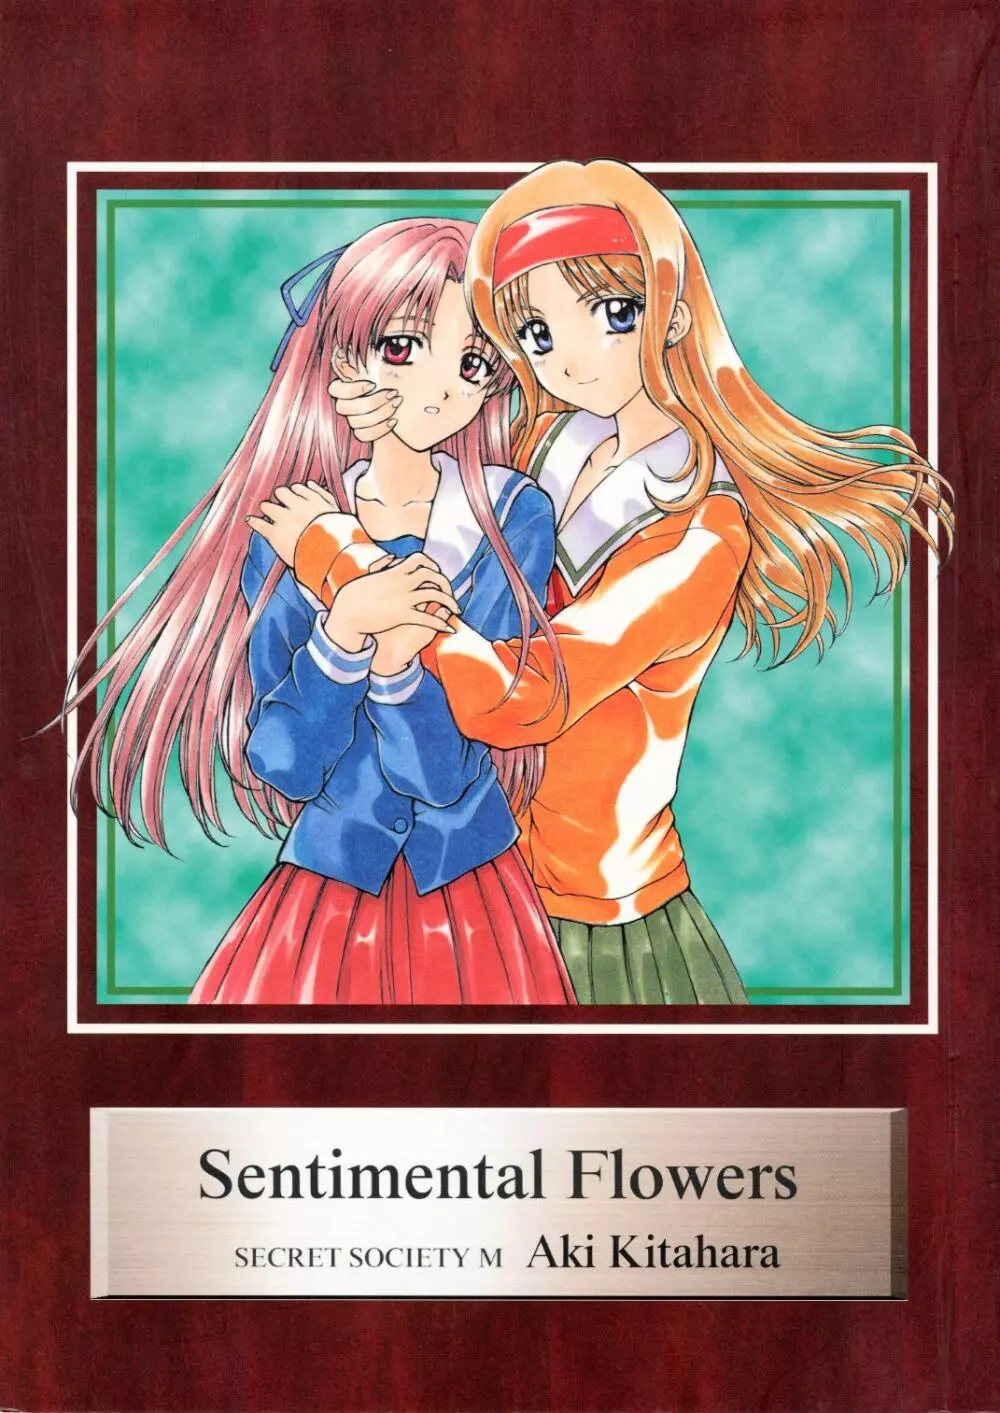 Sentimental Flowers